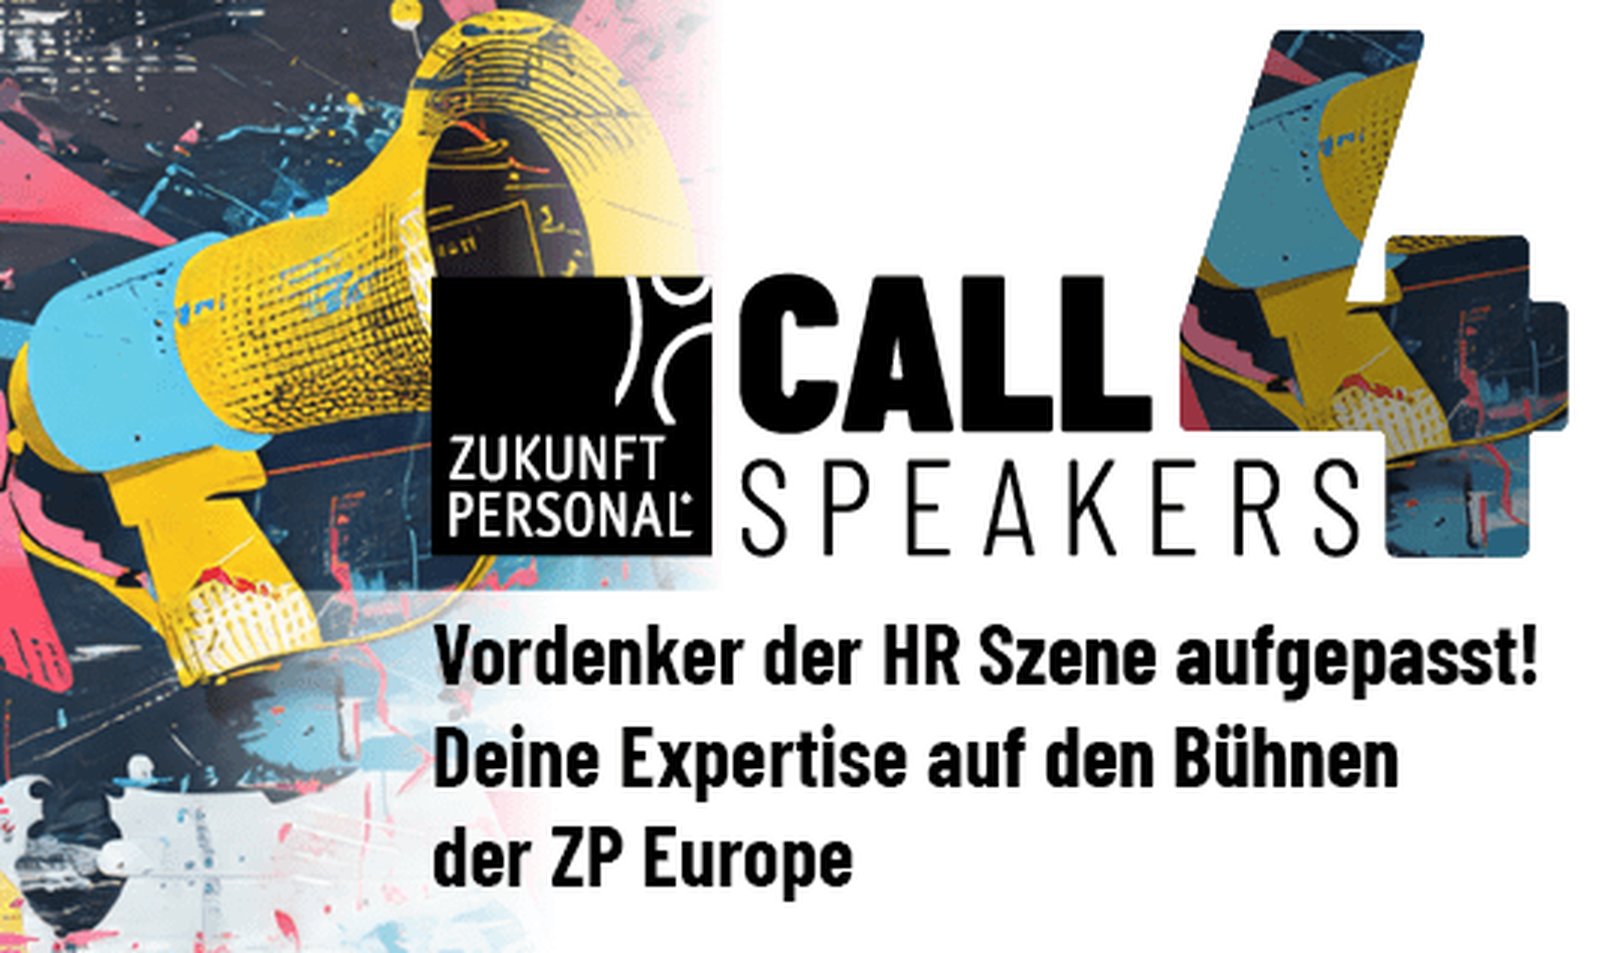 Grafik zum Call for Speakers zur ZP Europe